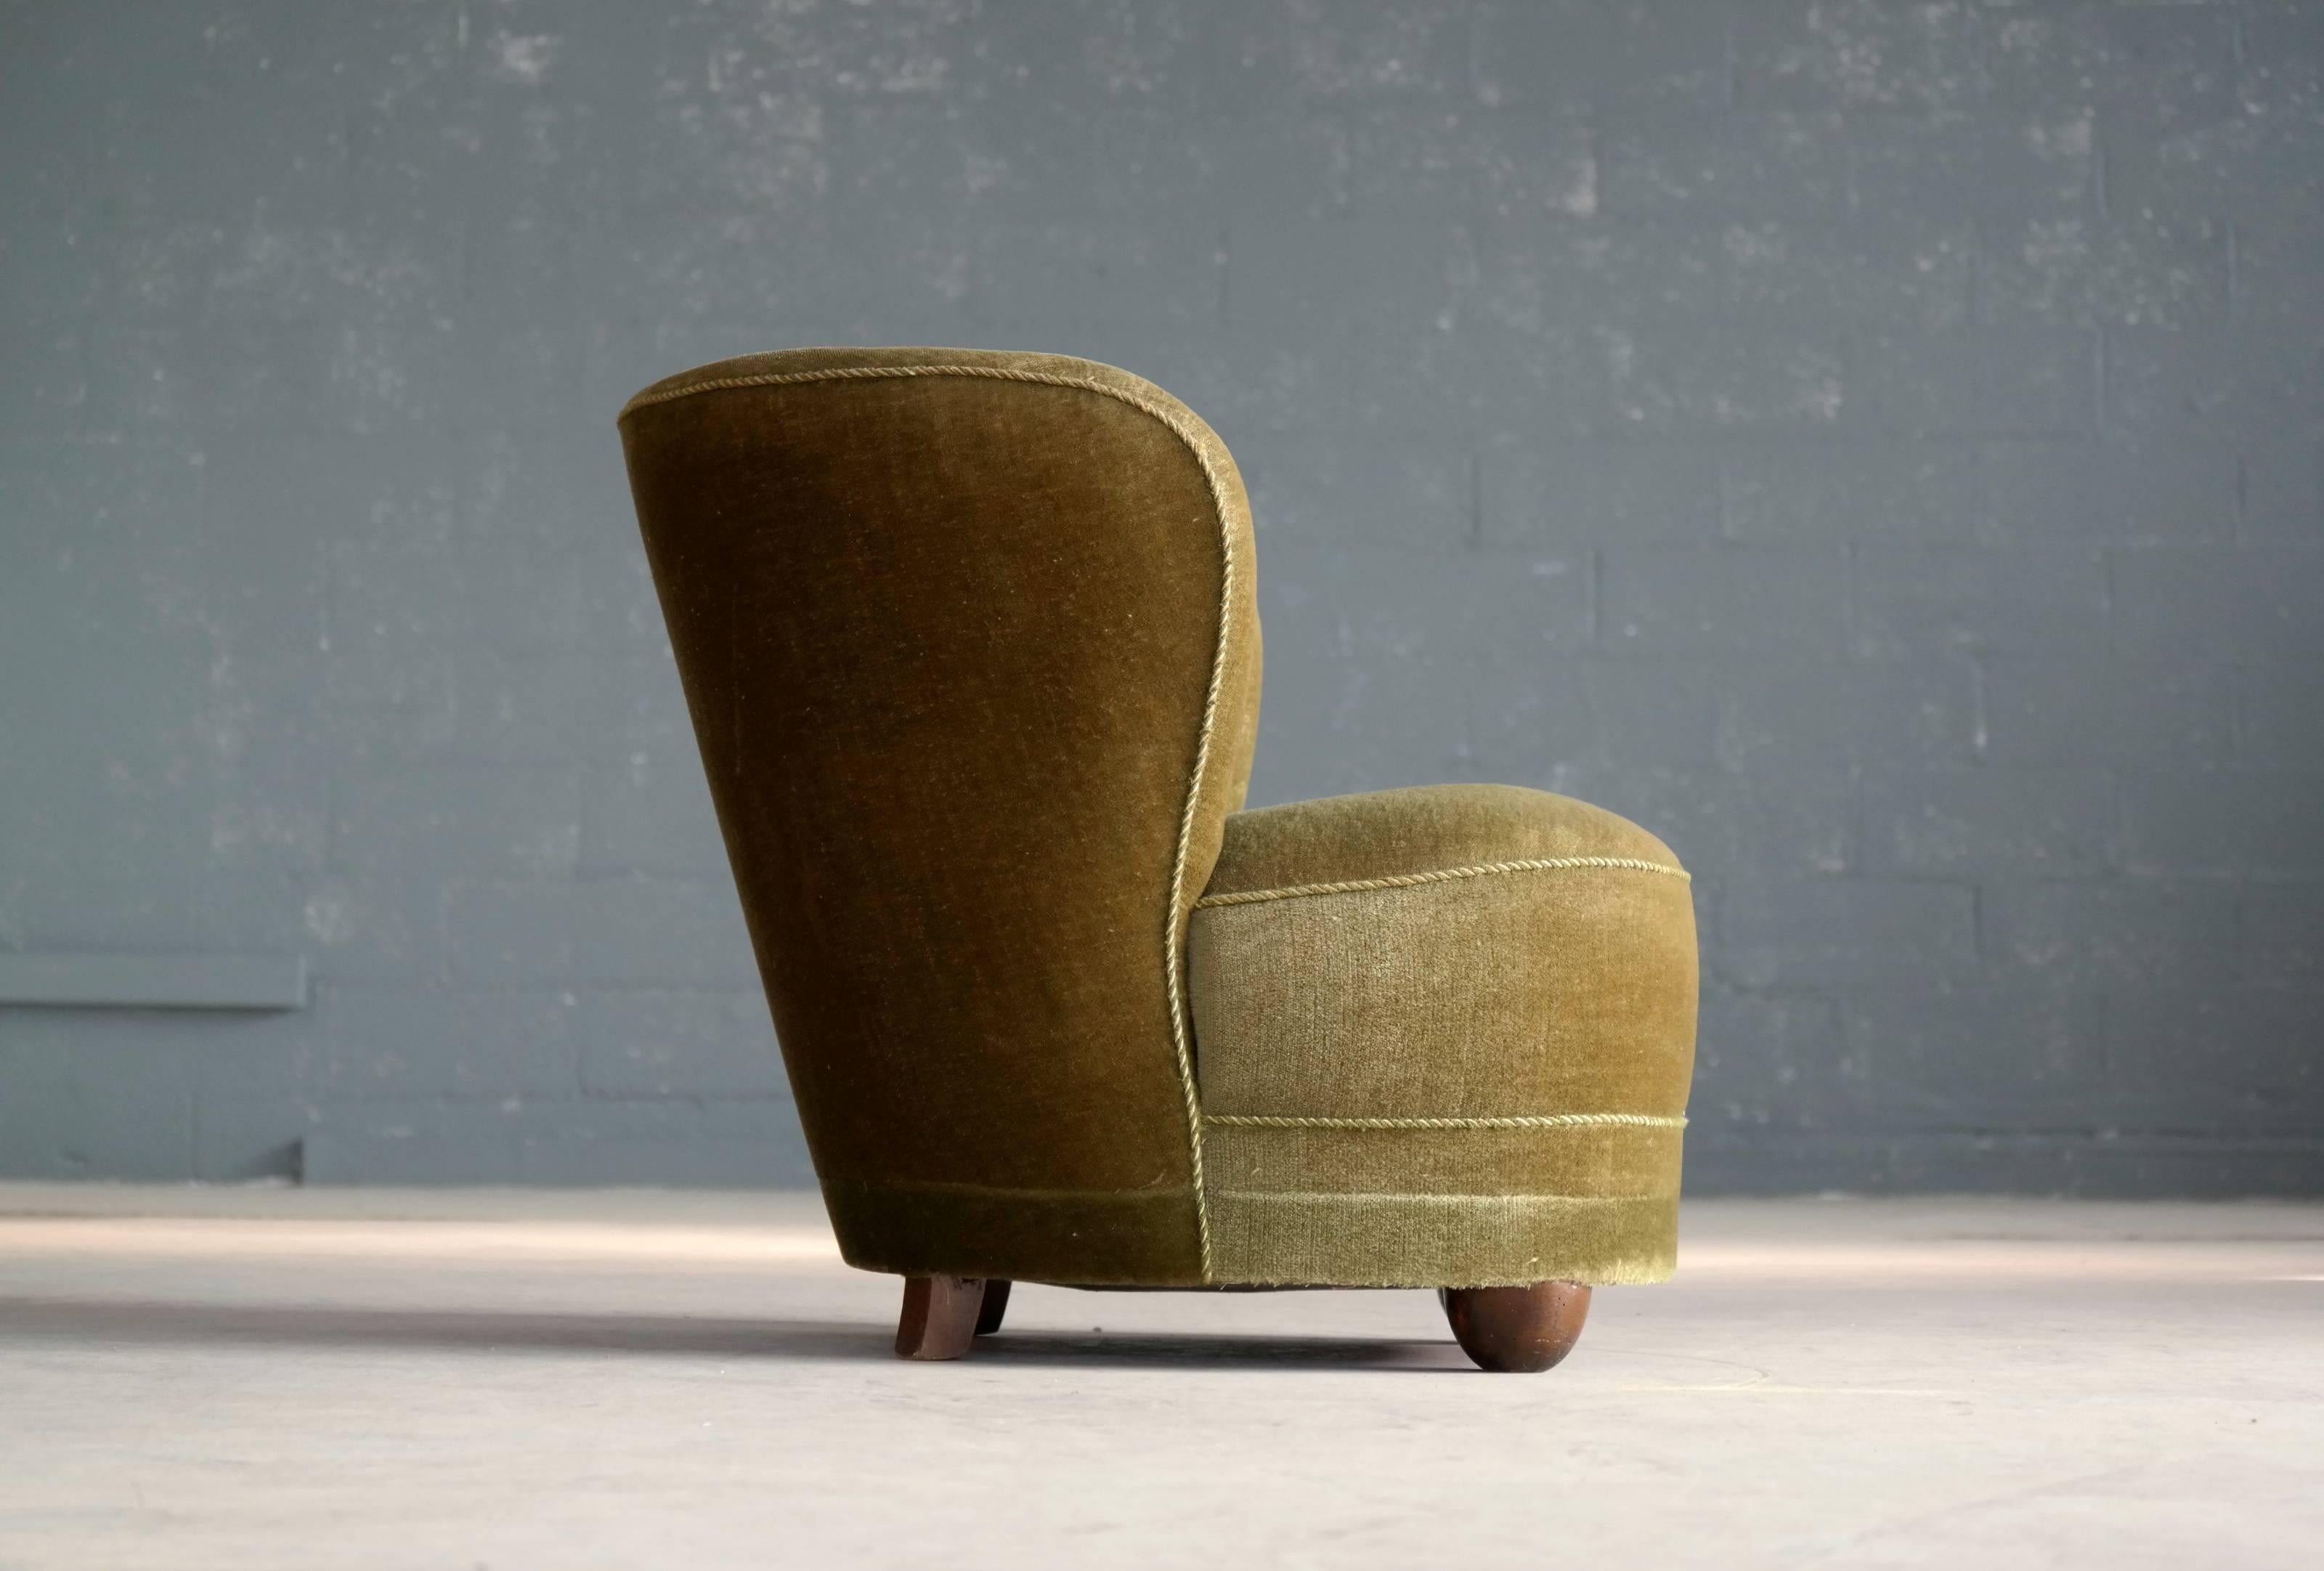 Danish Viggo Boesen Attributed, 1940s Lounge or Slipper Chair in Mohair